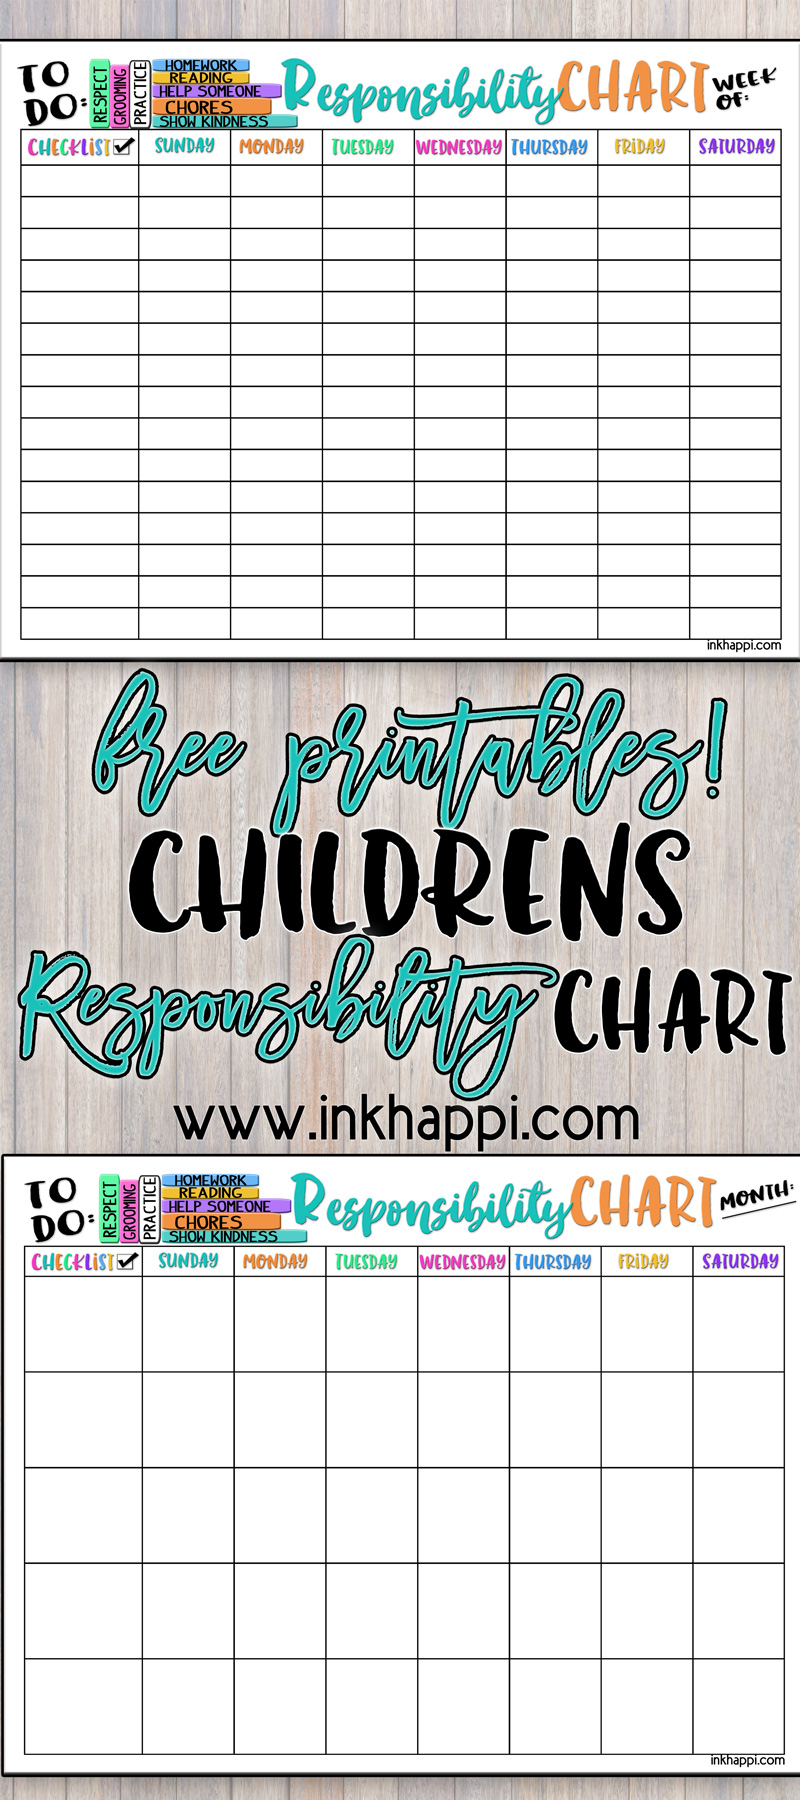 childrens-responsibility-charts-free-printables-inkhappi